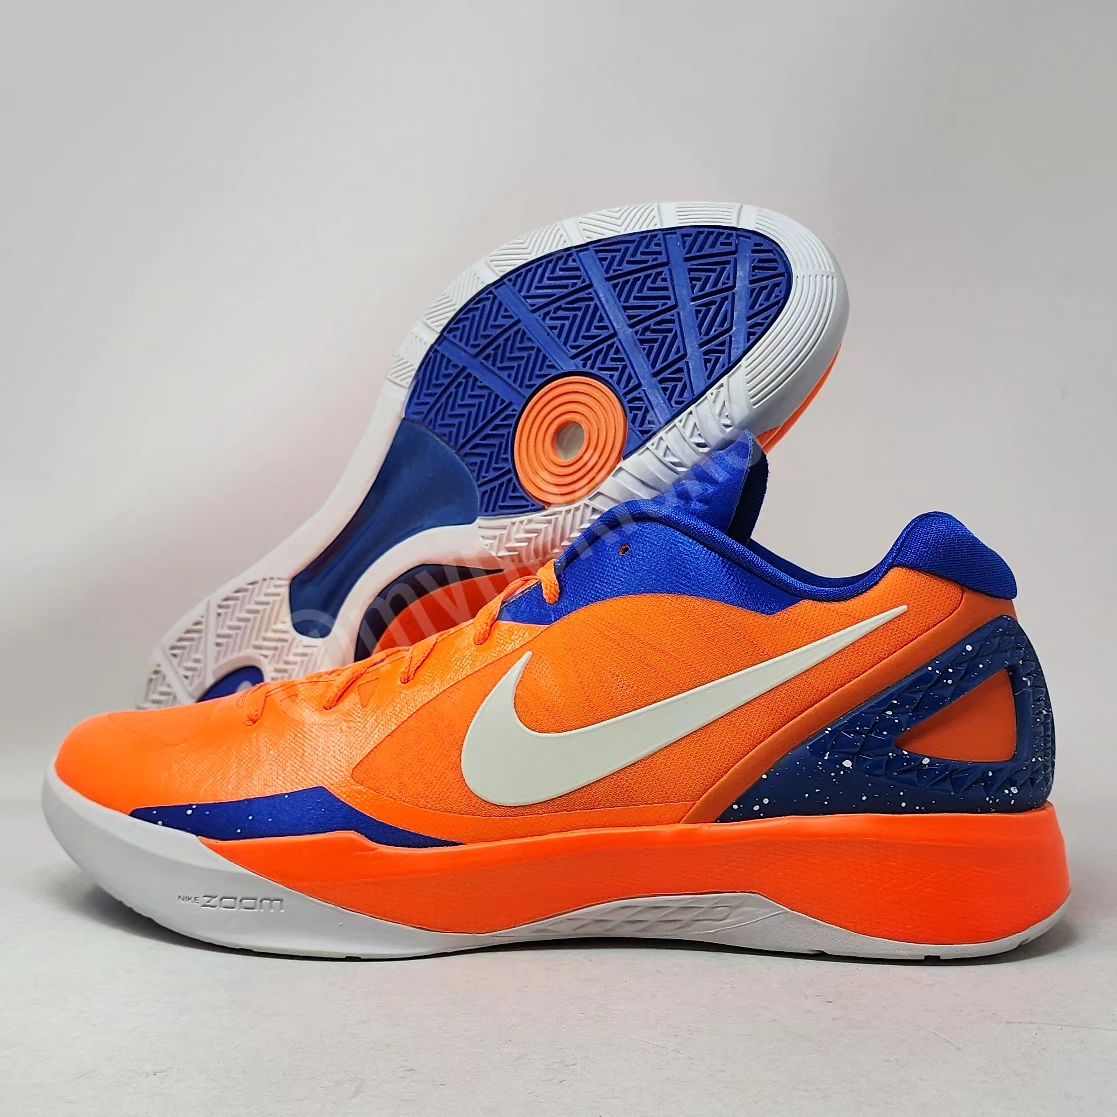 Nike Hyperdunk 2011 Low - Jeremy Lin New York Knicks PE